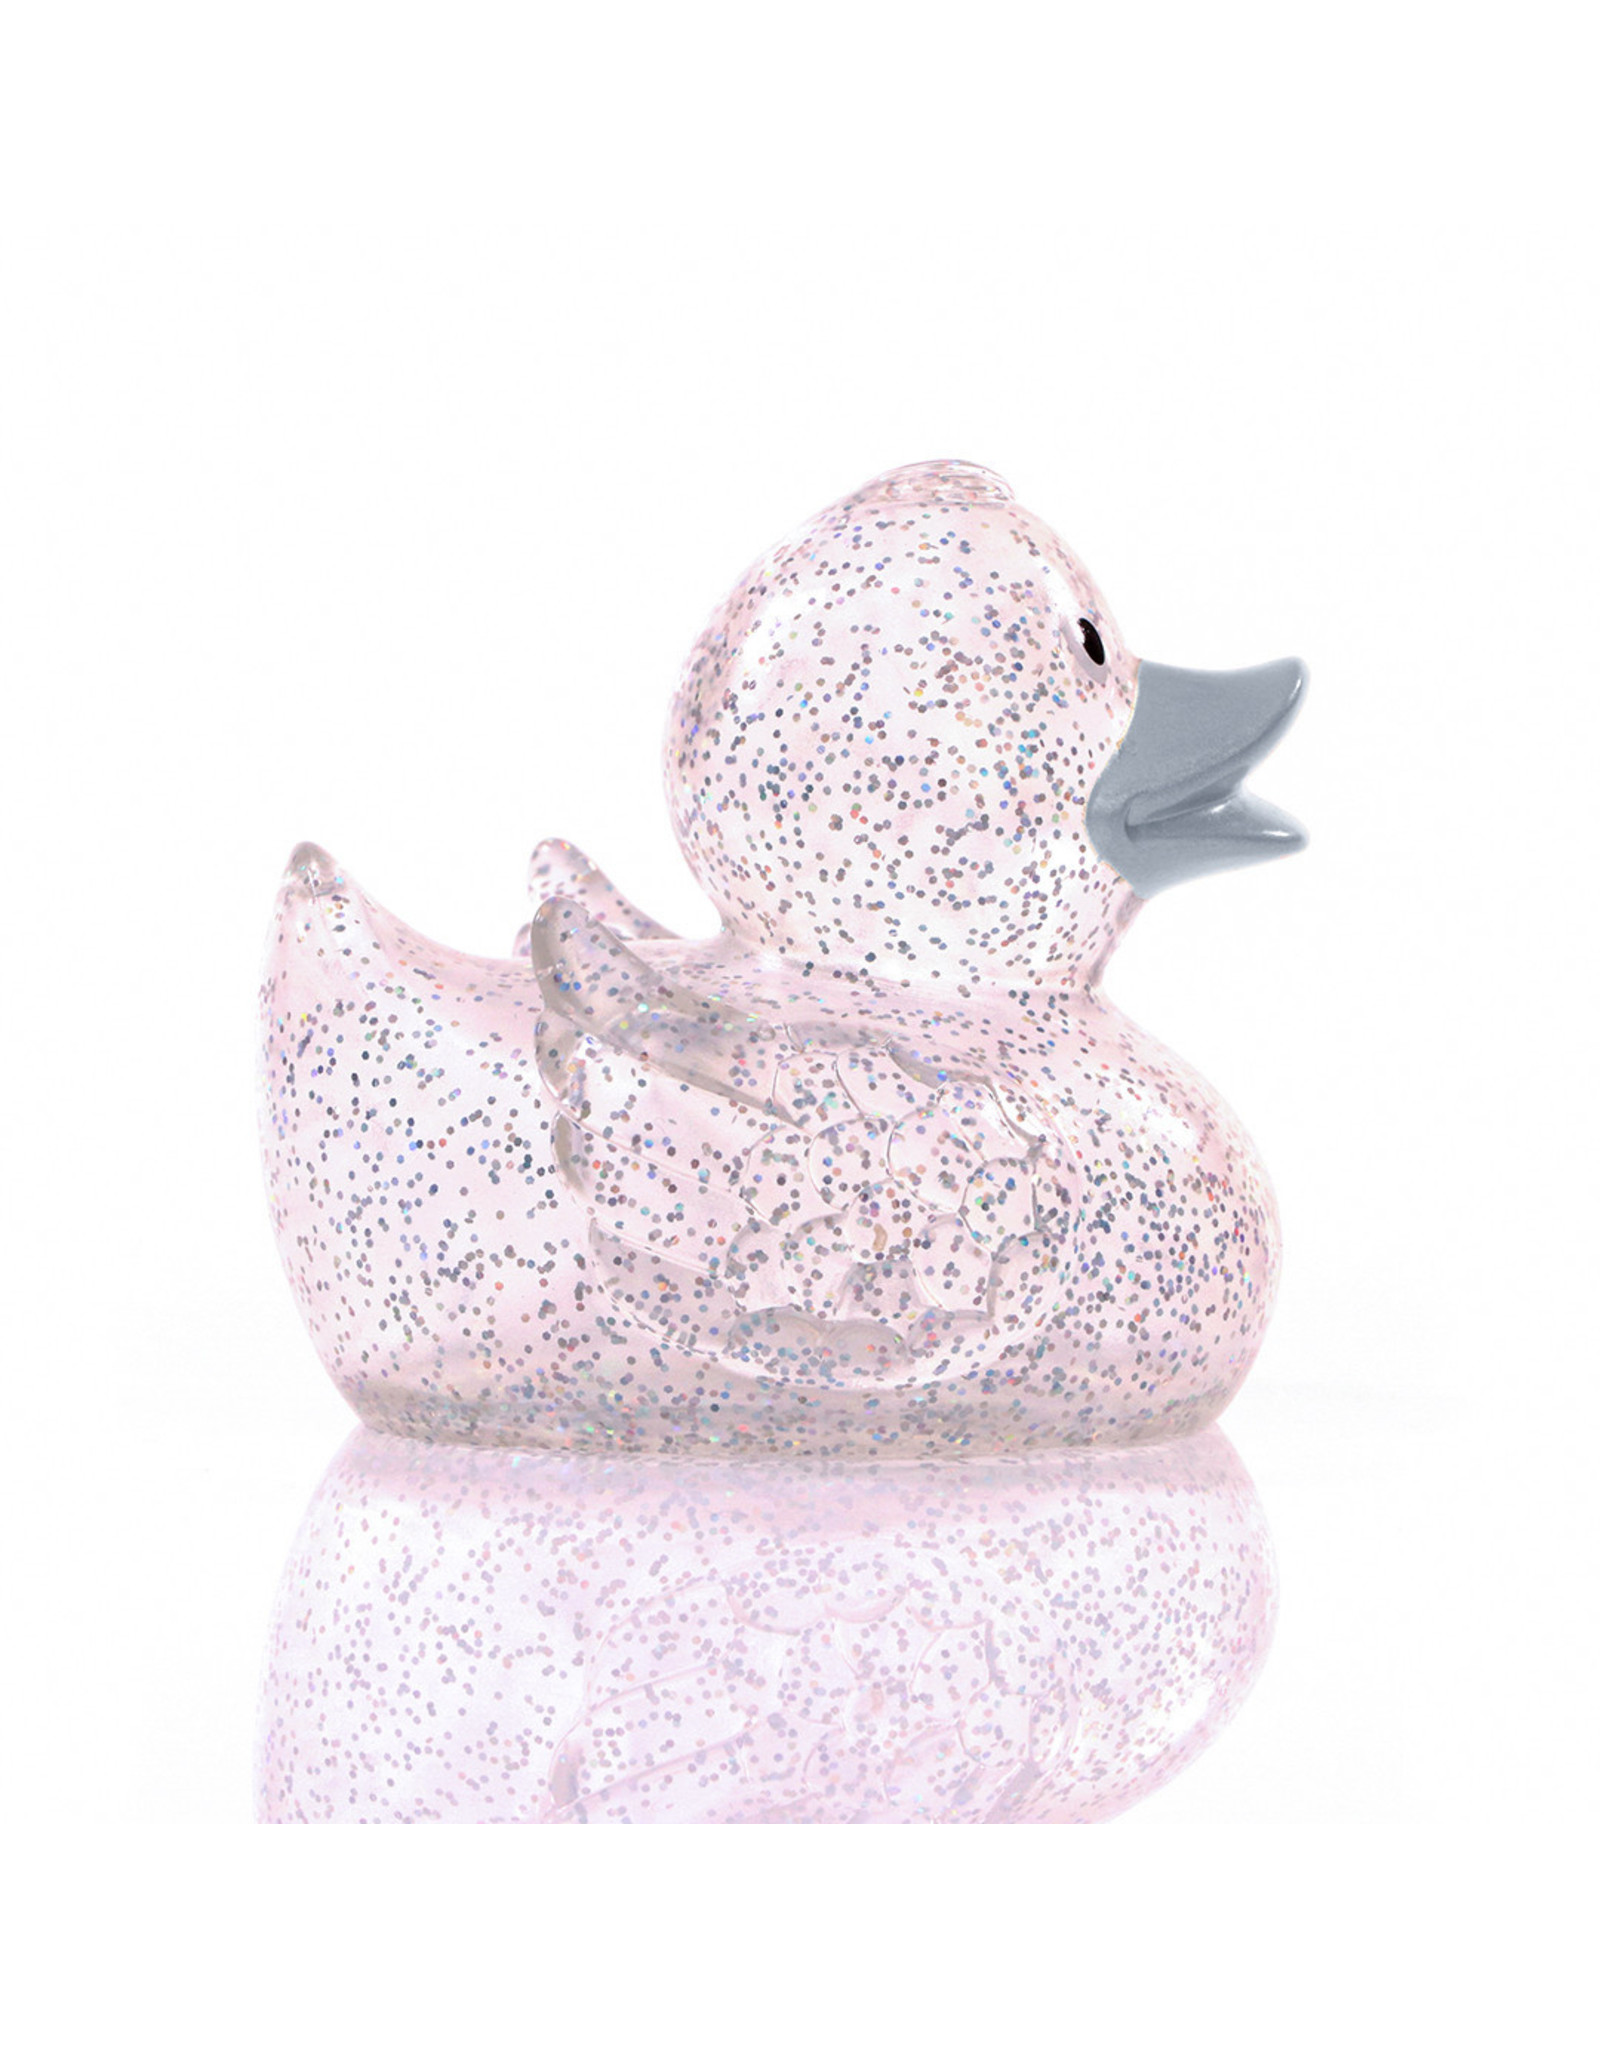 Glitter Rubber Duck with Silver Beak